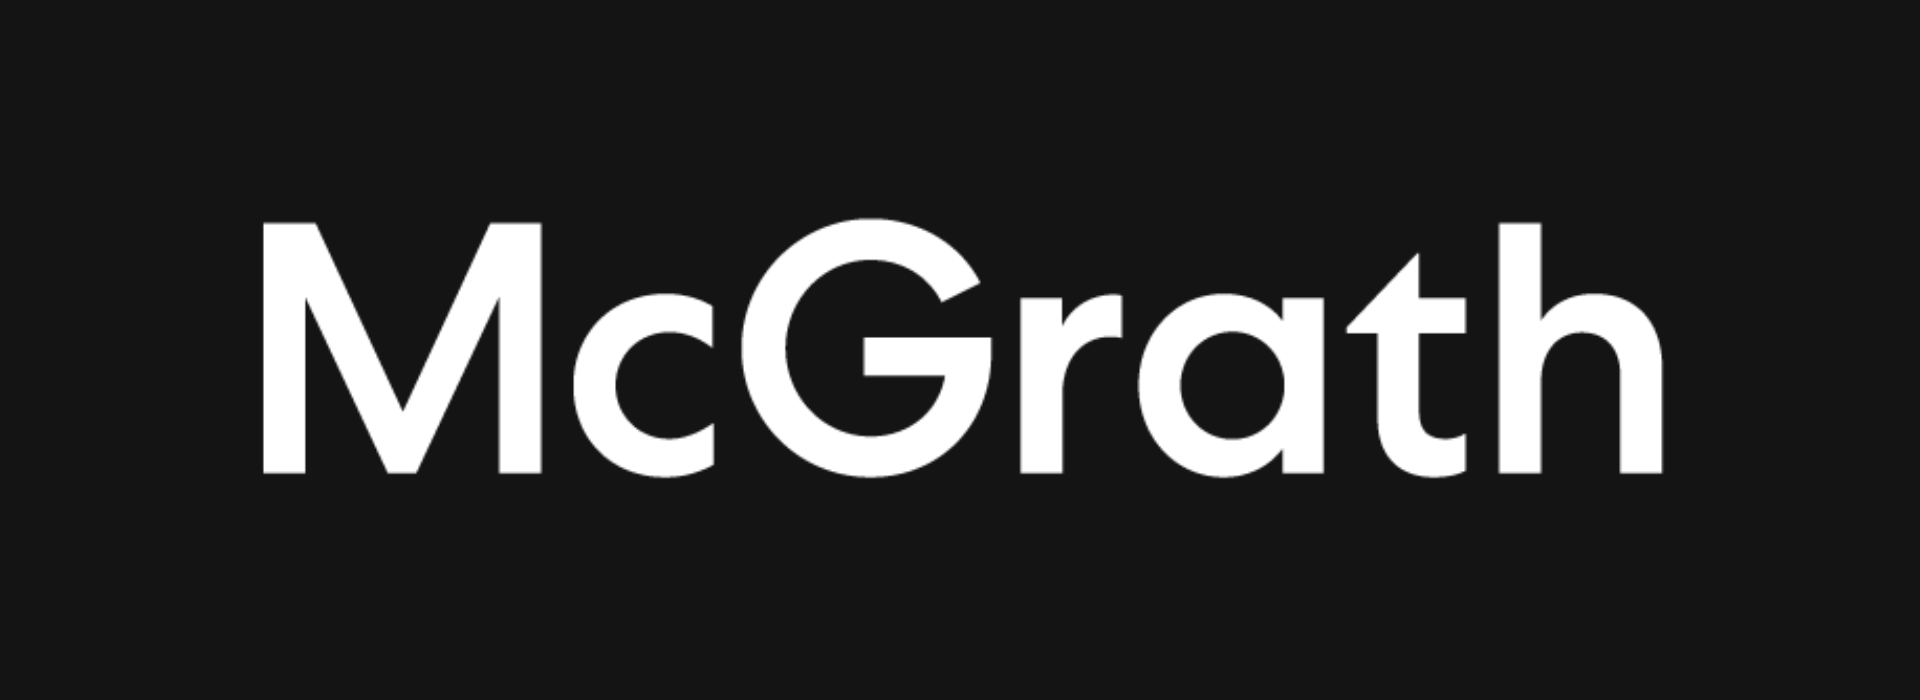 McGrath St George's logo